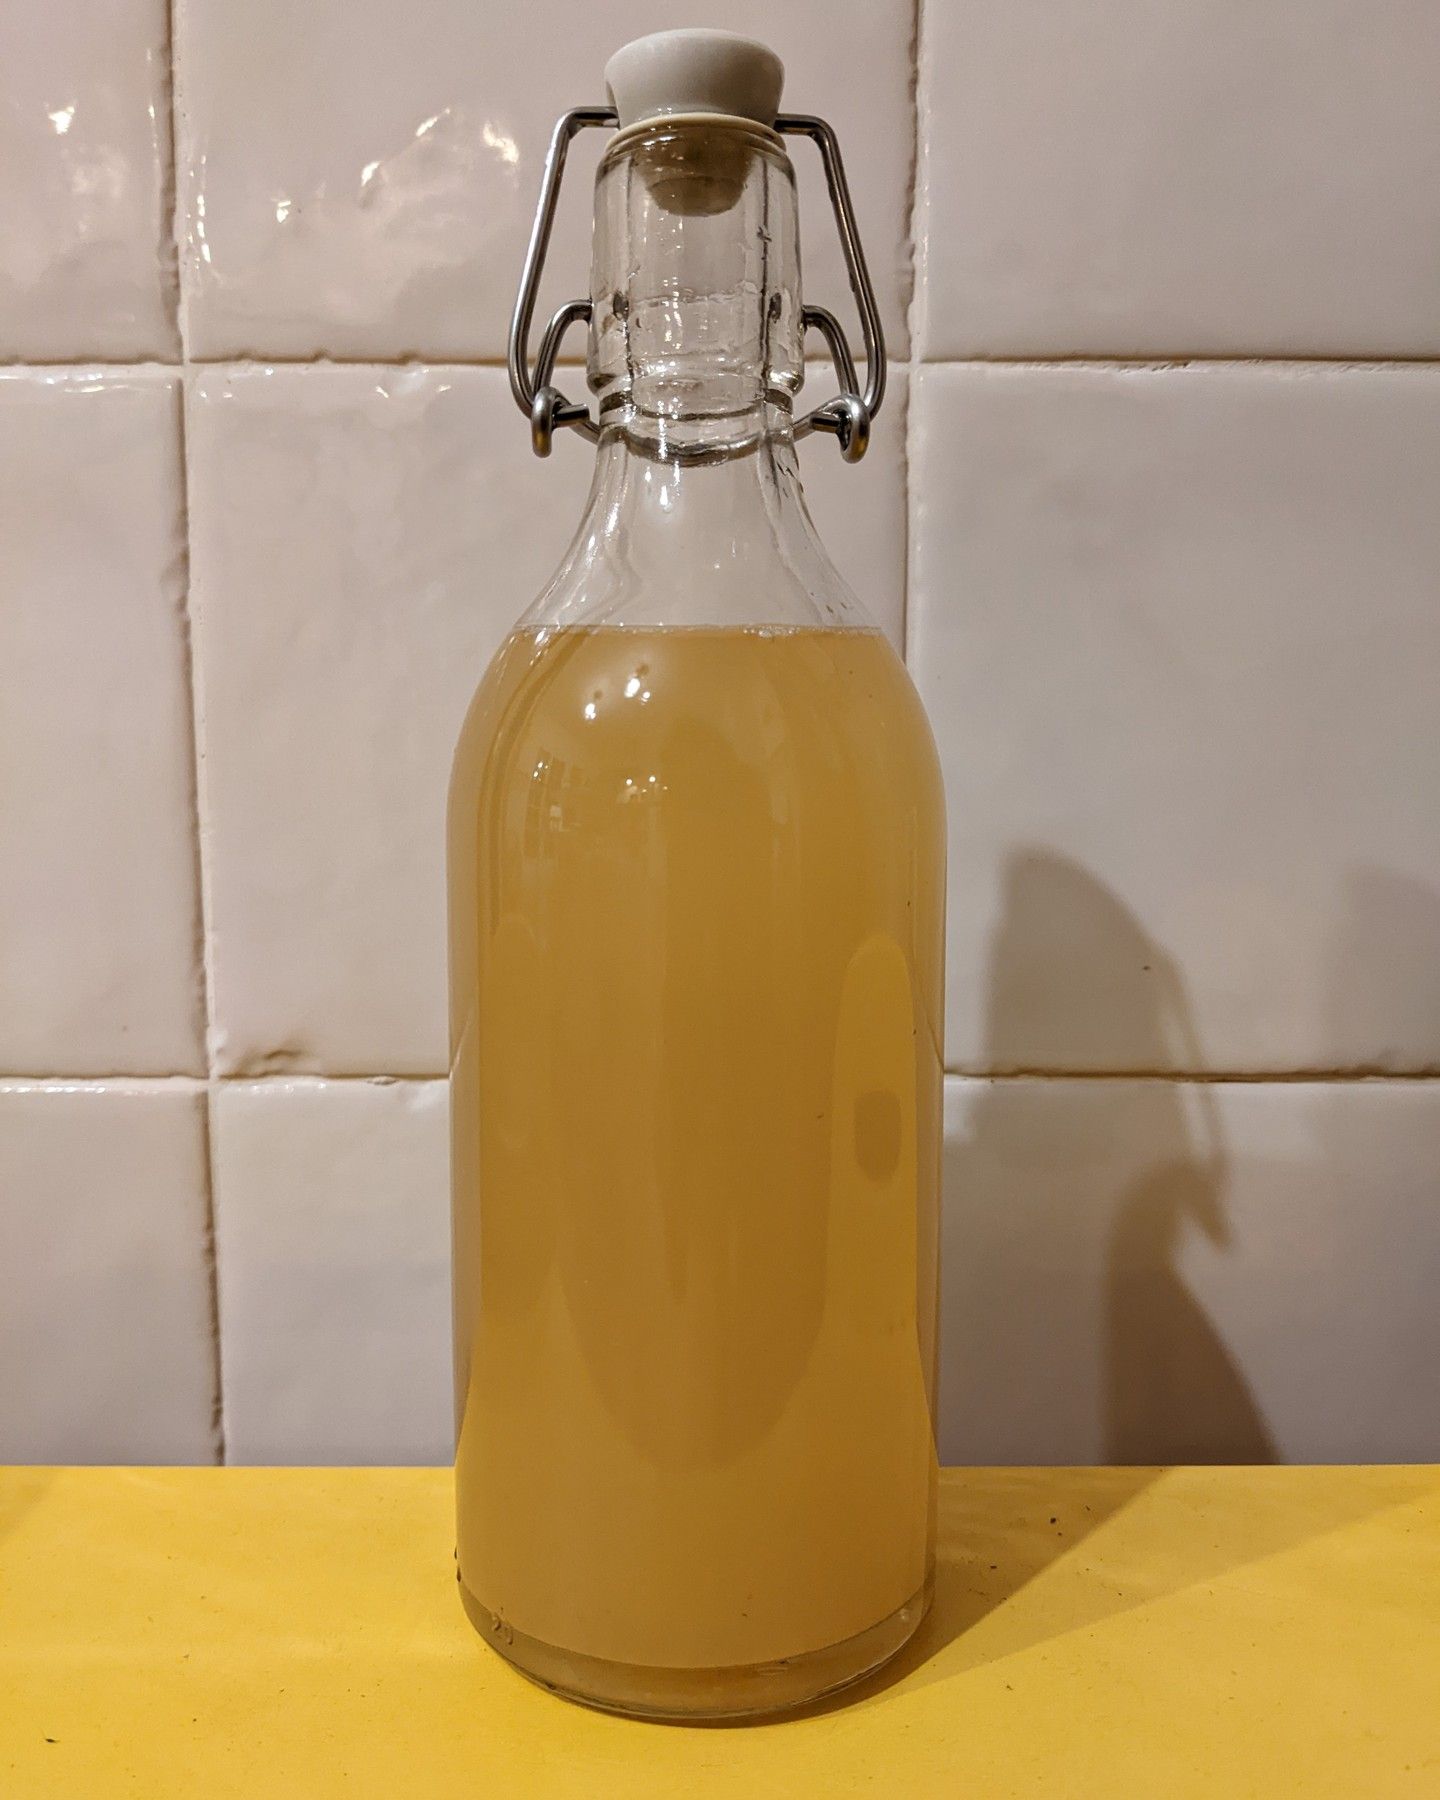 The Apple Cider Vinegar is ready